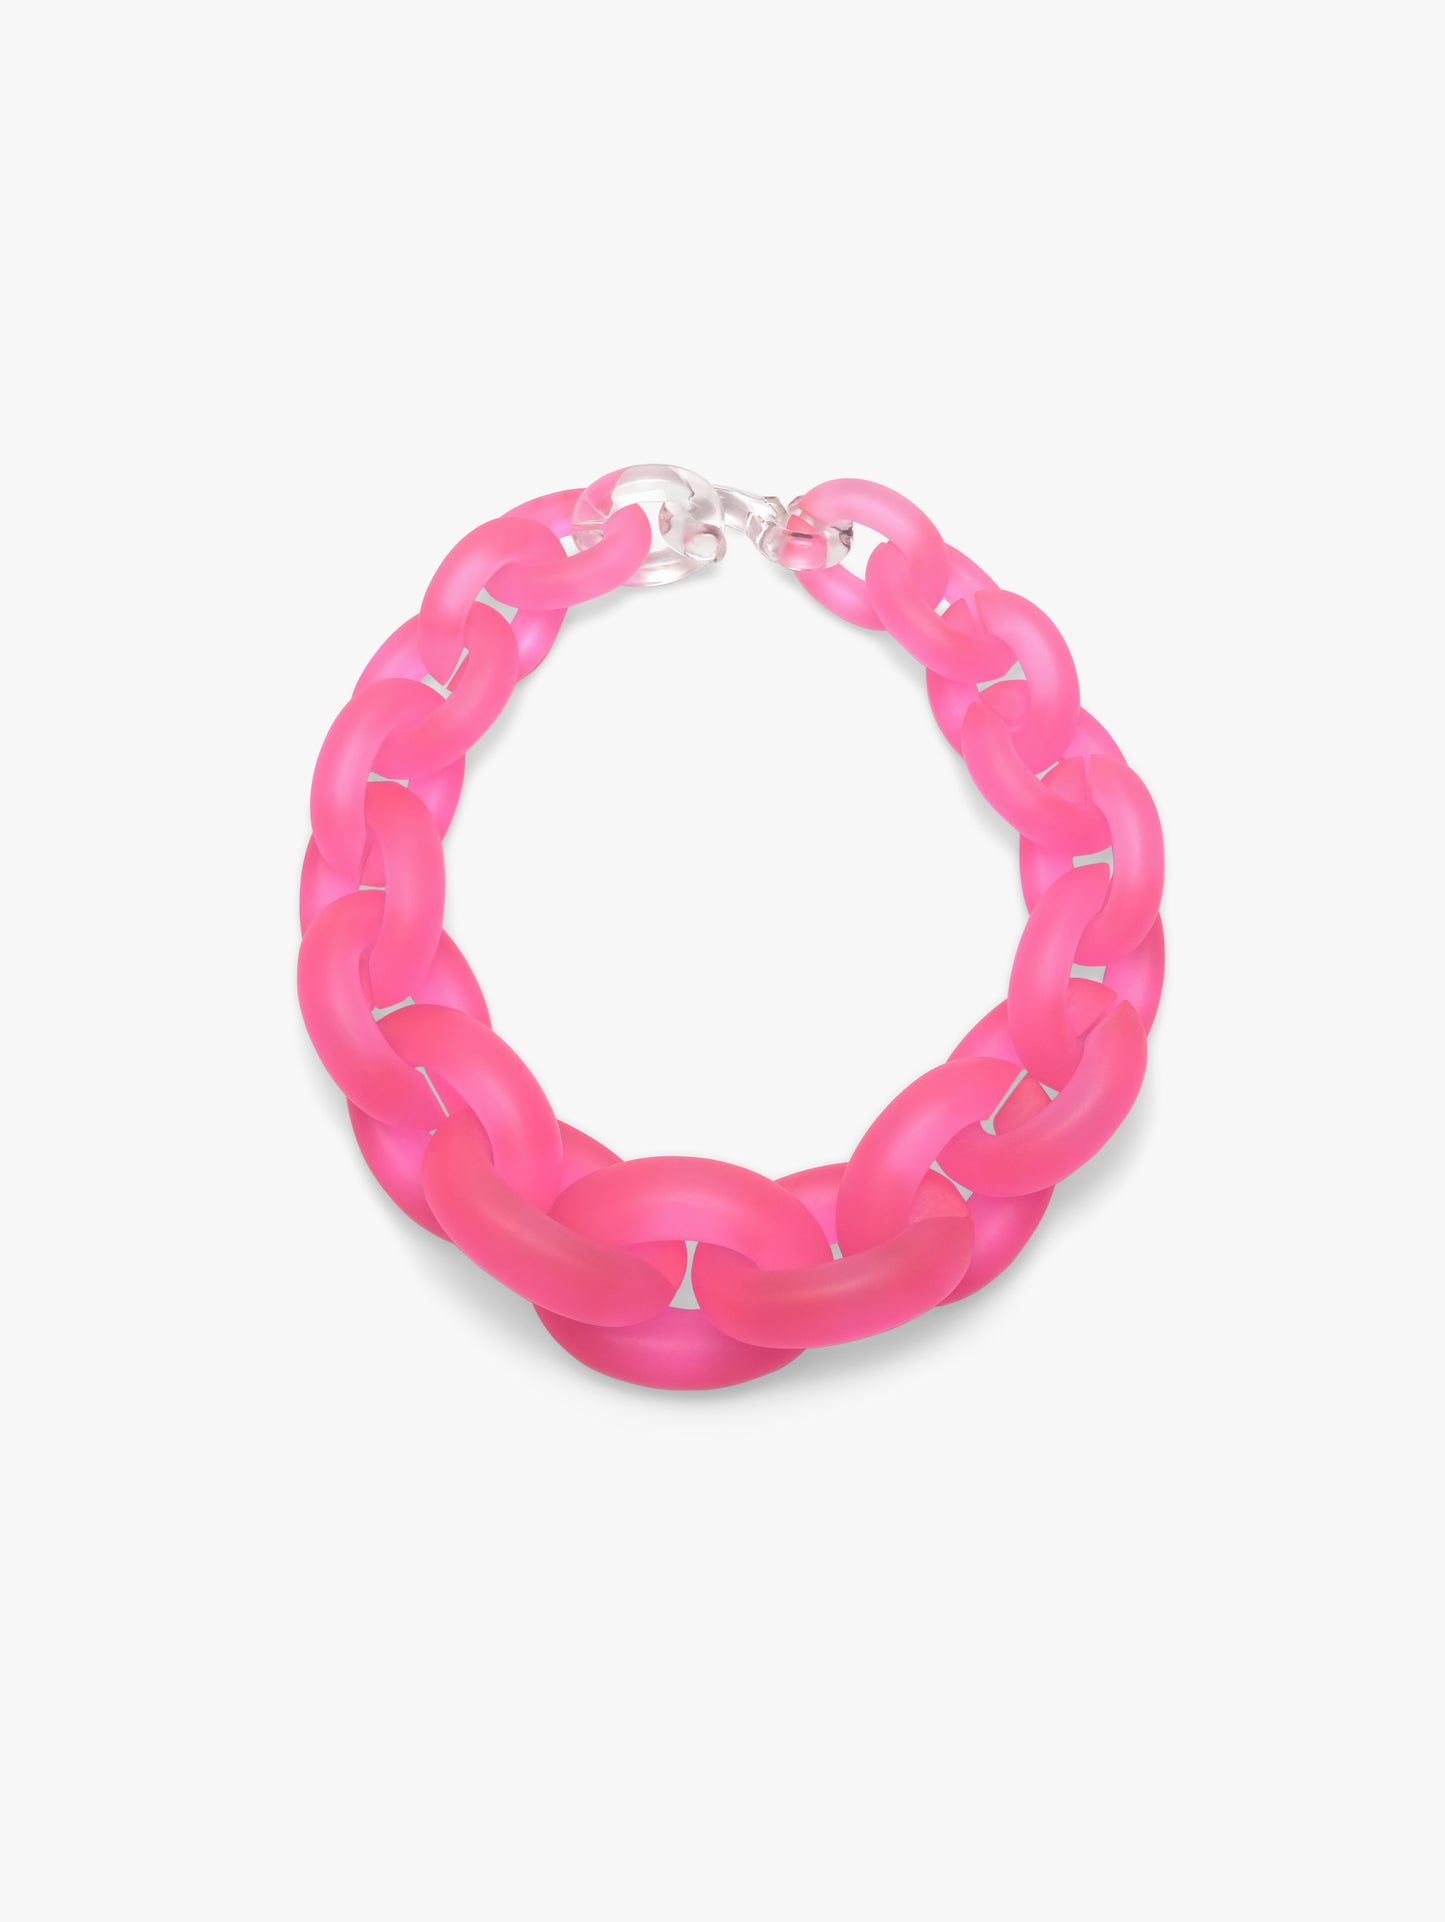 Ipplo necklace pink